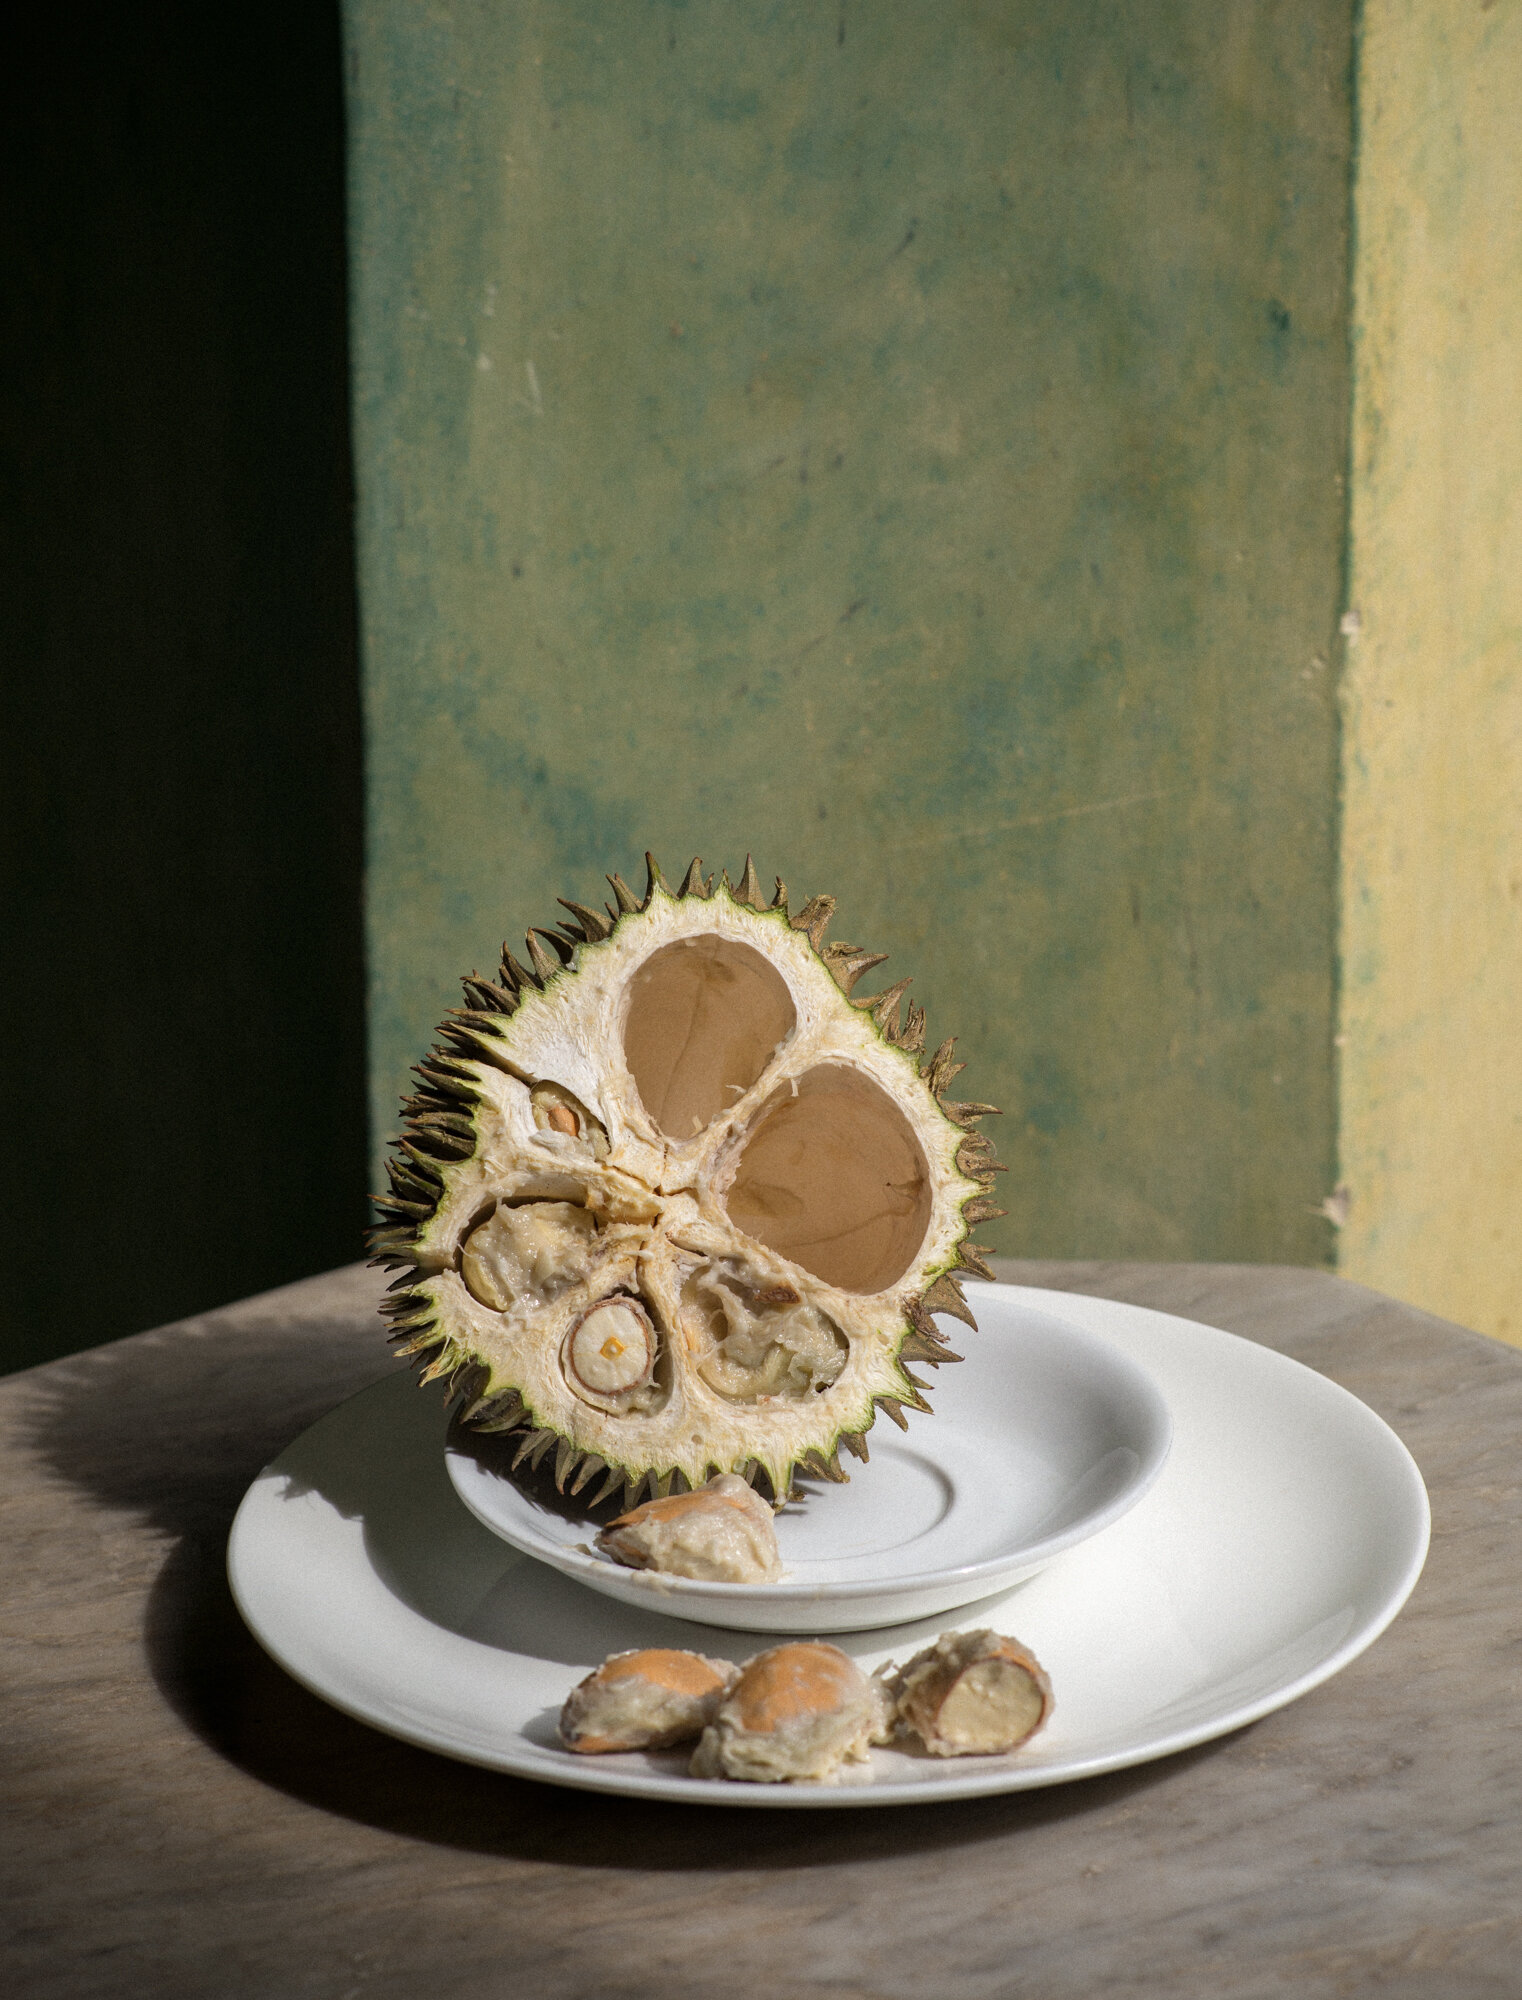  Durian fruit - Emerson on Hurumzi, Stone Town 